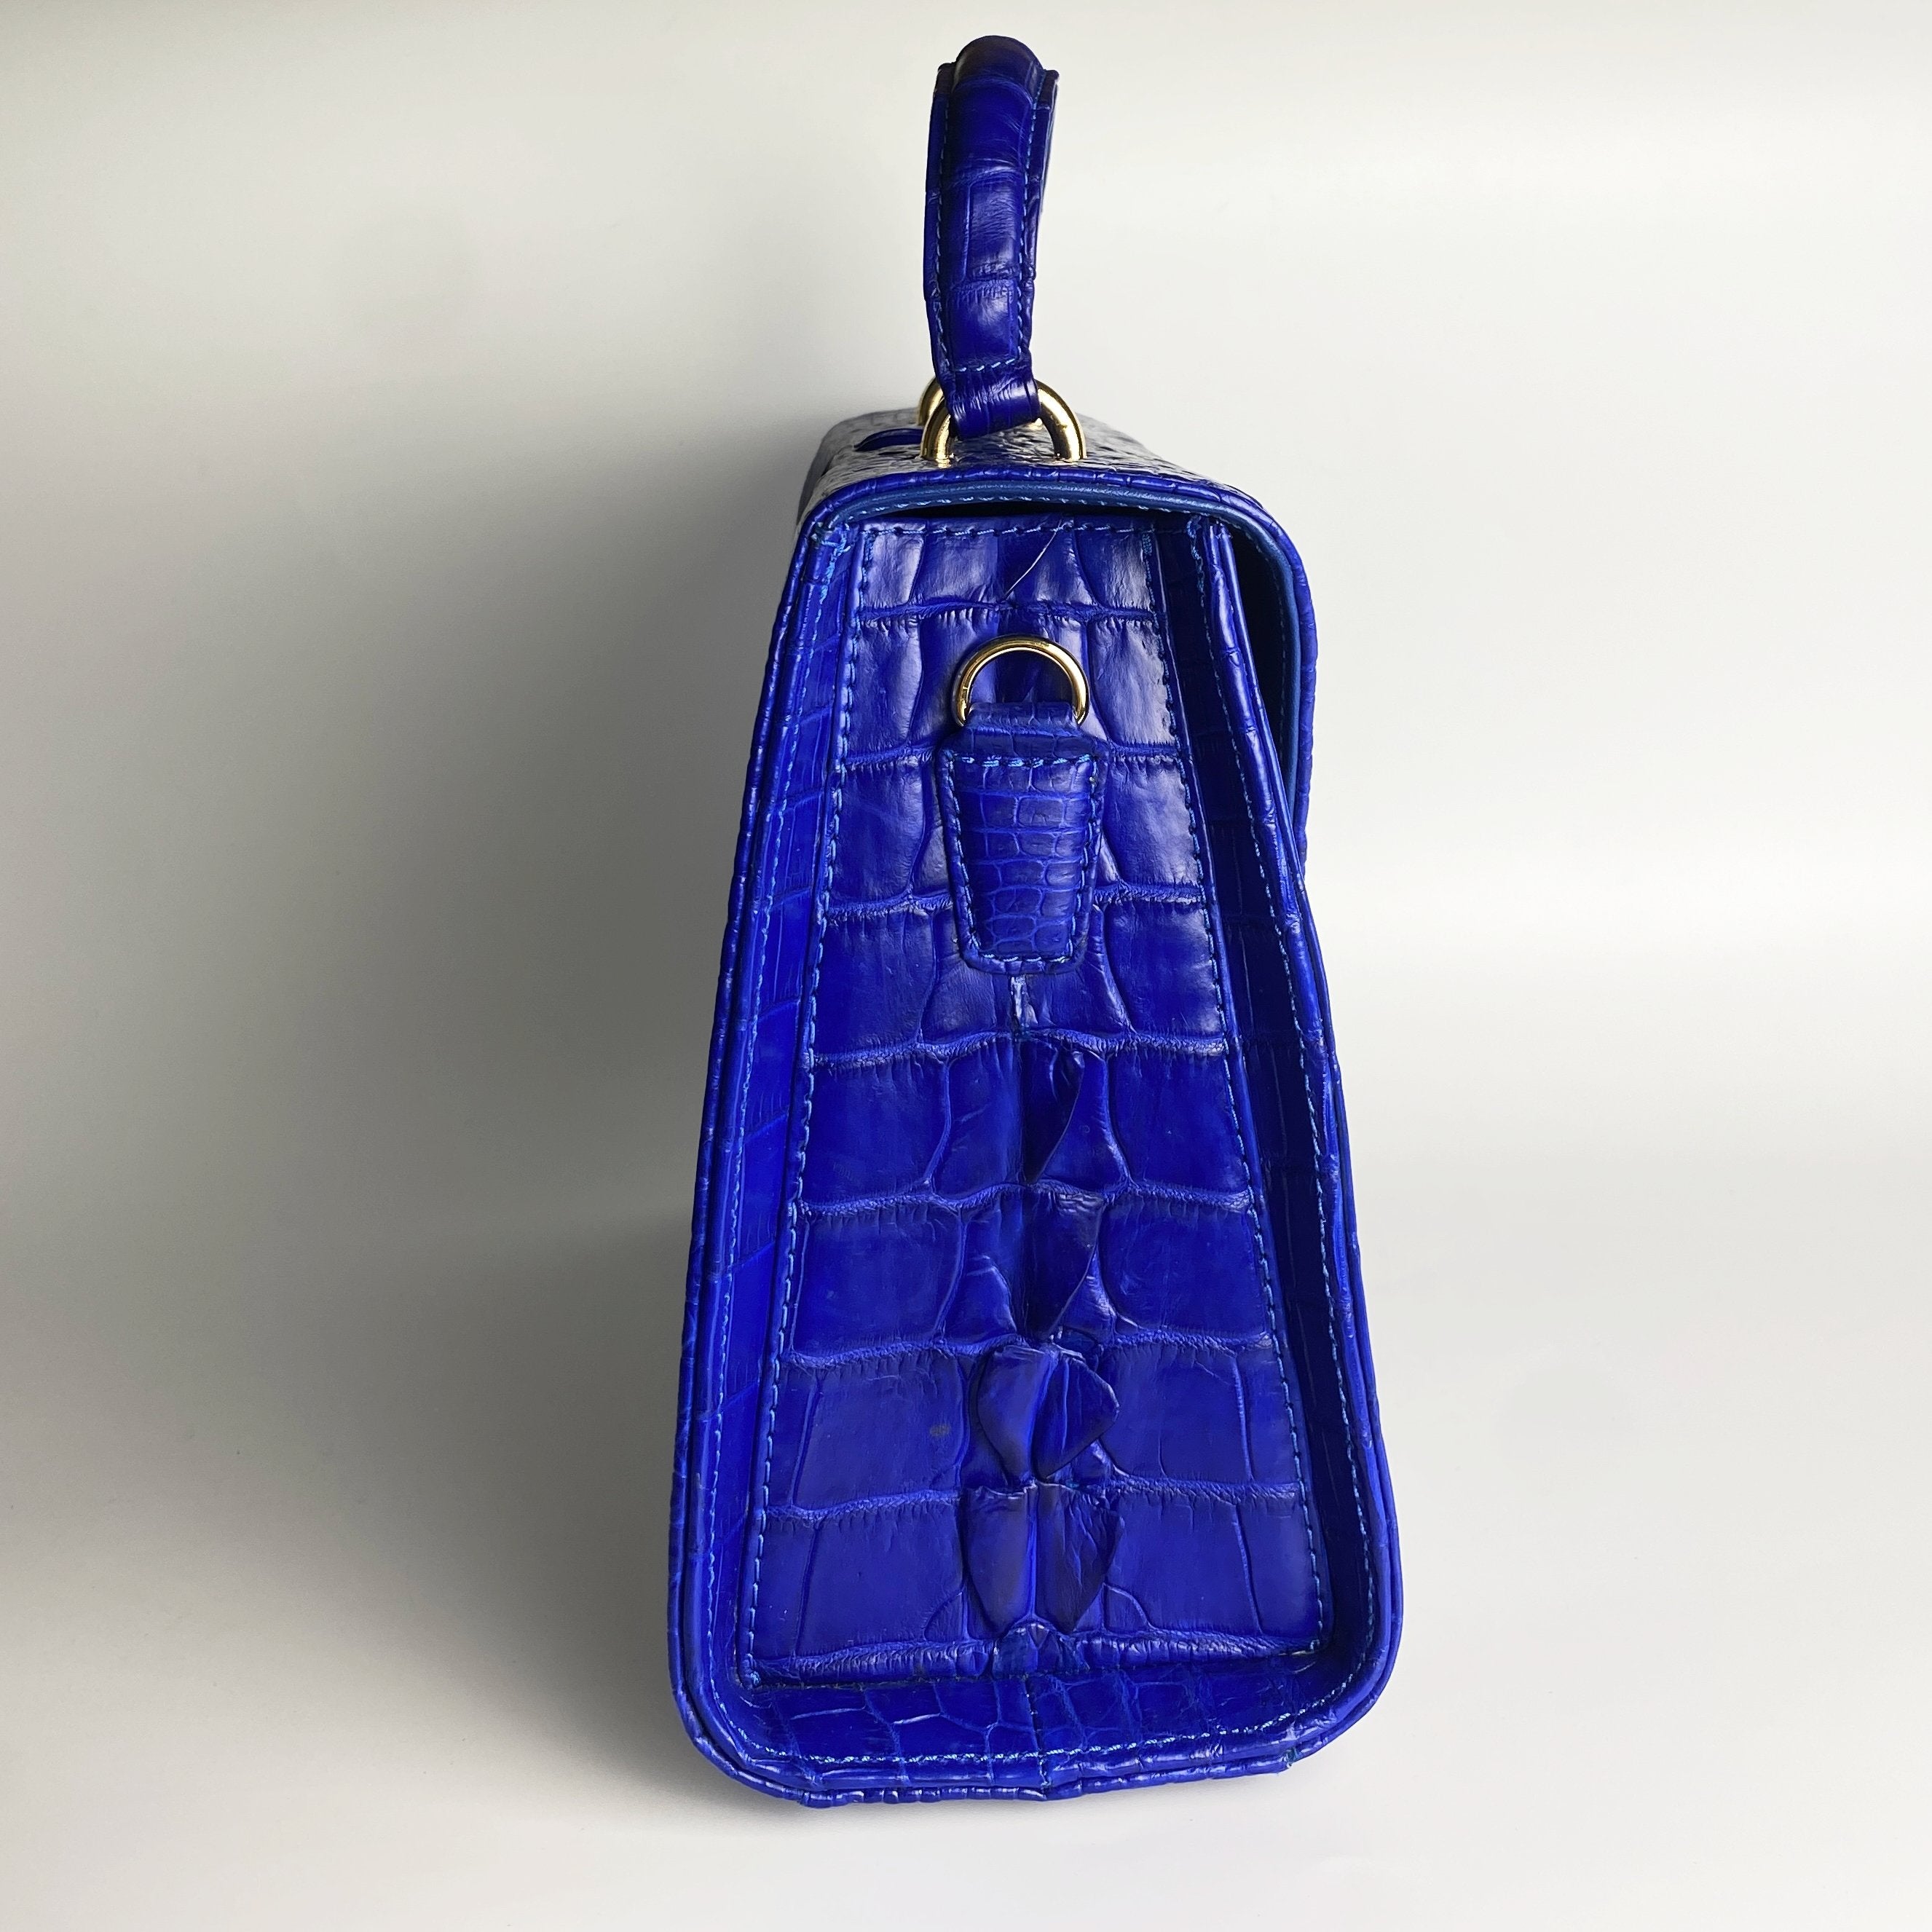 Croc Alligator Crossbody Bag (Colors: Salmon, Blue, Black, Brown